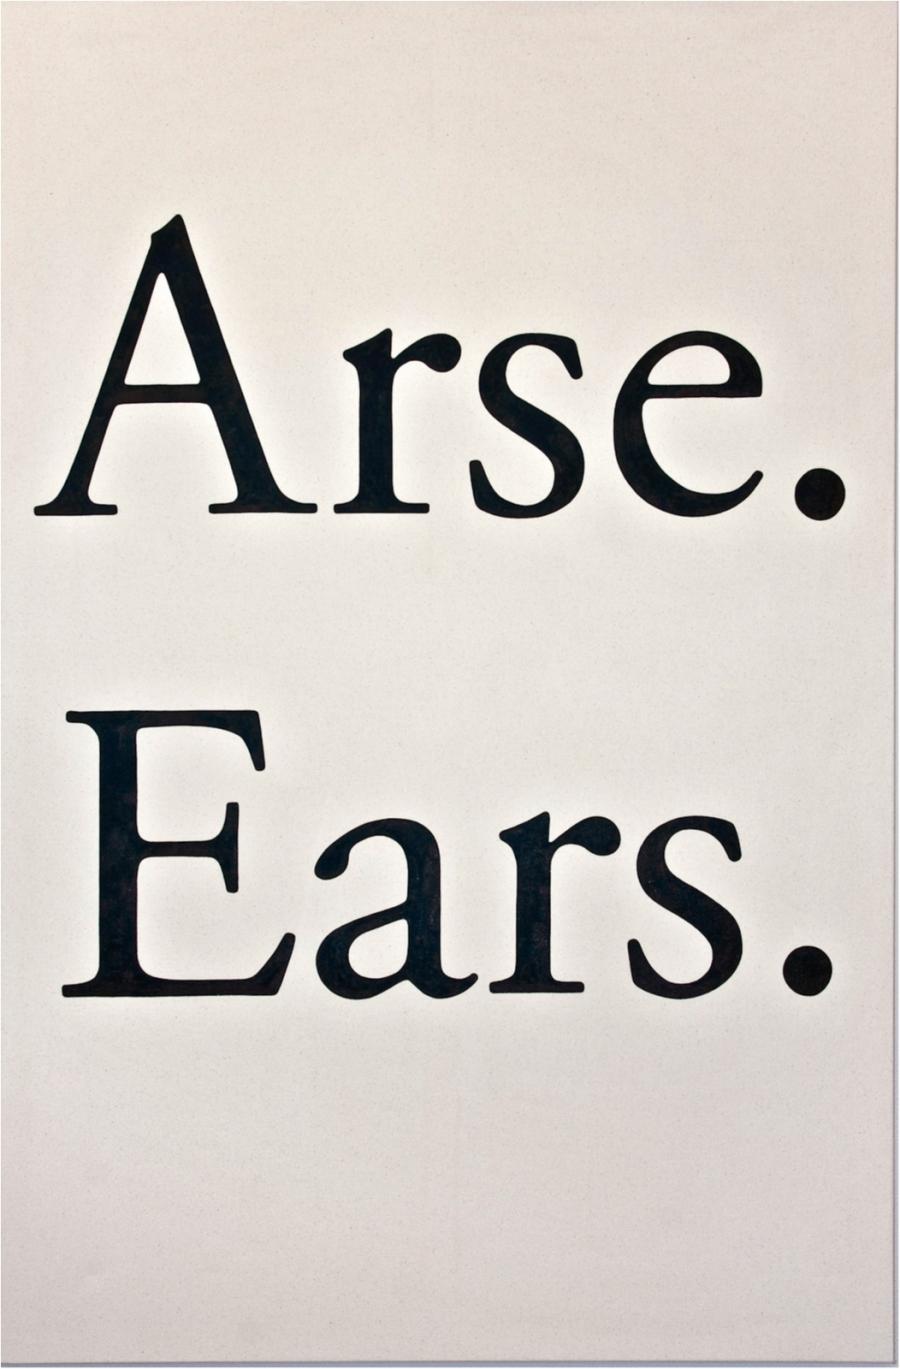 Arse Ears. (2011)